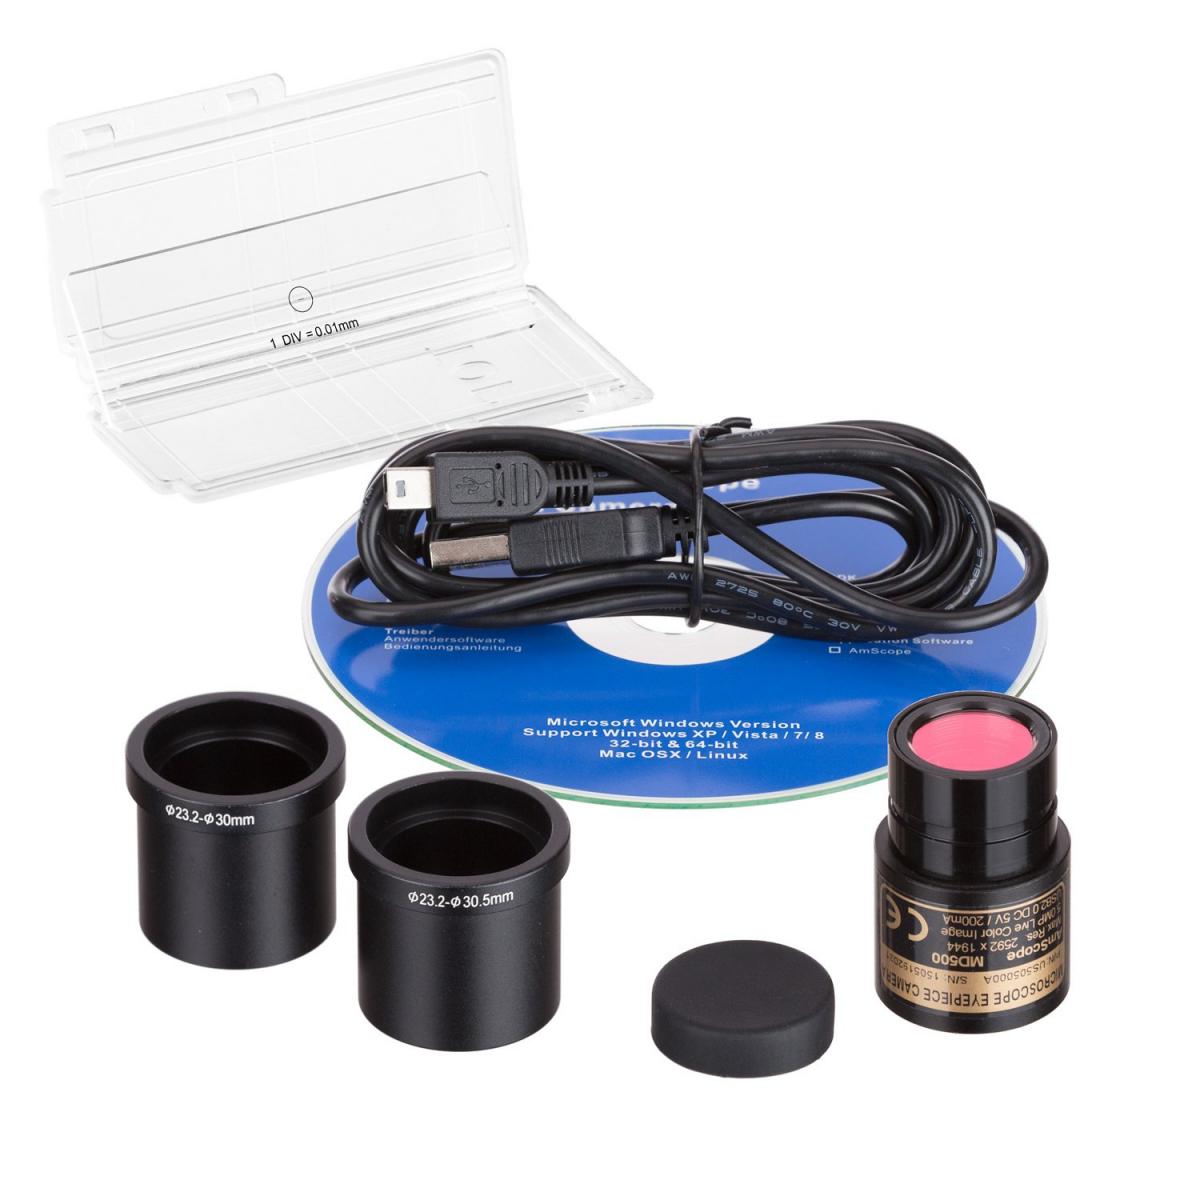 12mp-industrial-digital-camera-with-adapter,دوربین میکروسکوپ,خرید دوربین میکروسکوپ,دوربین دیجیتال, میکروسکوپ,میکروسکوپ دیجیتال